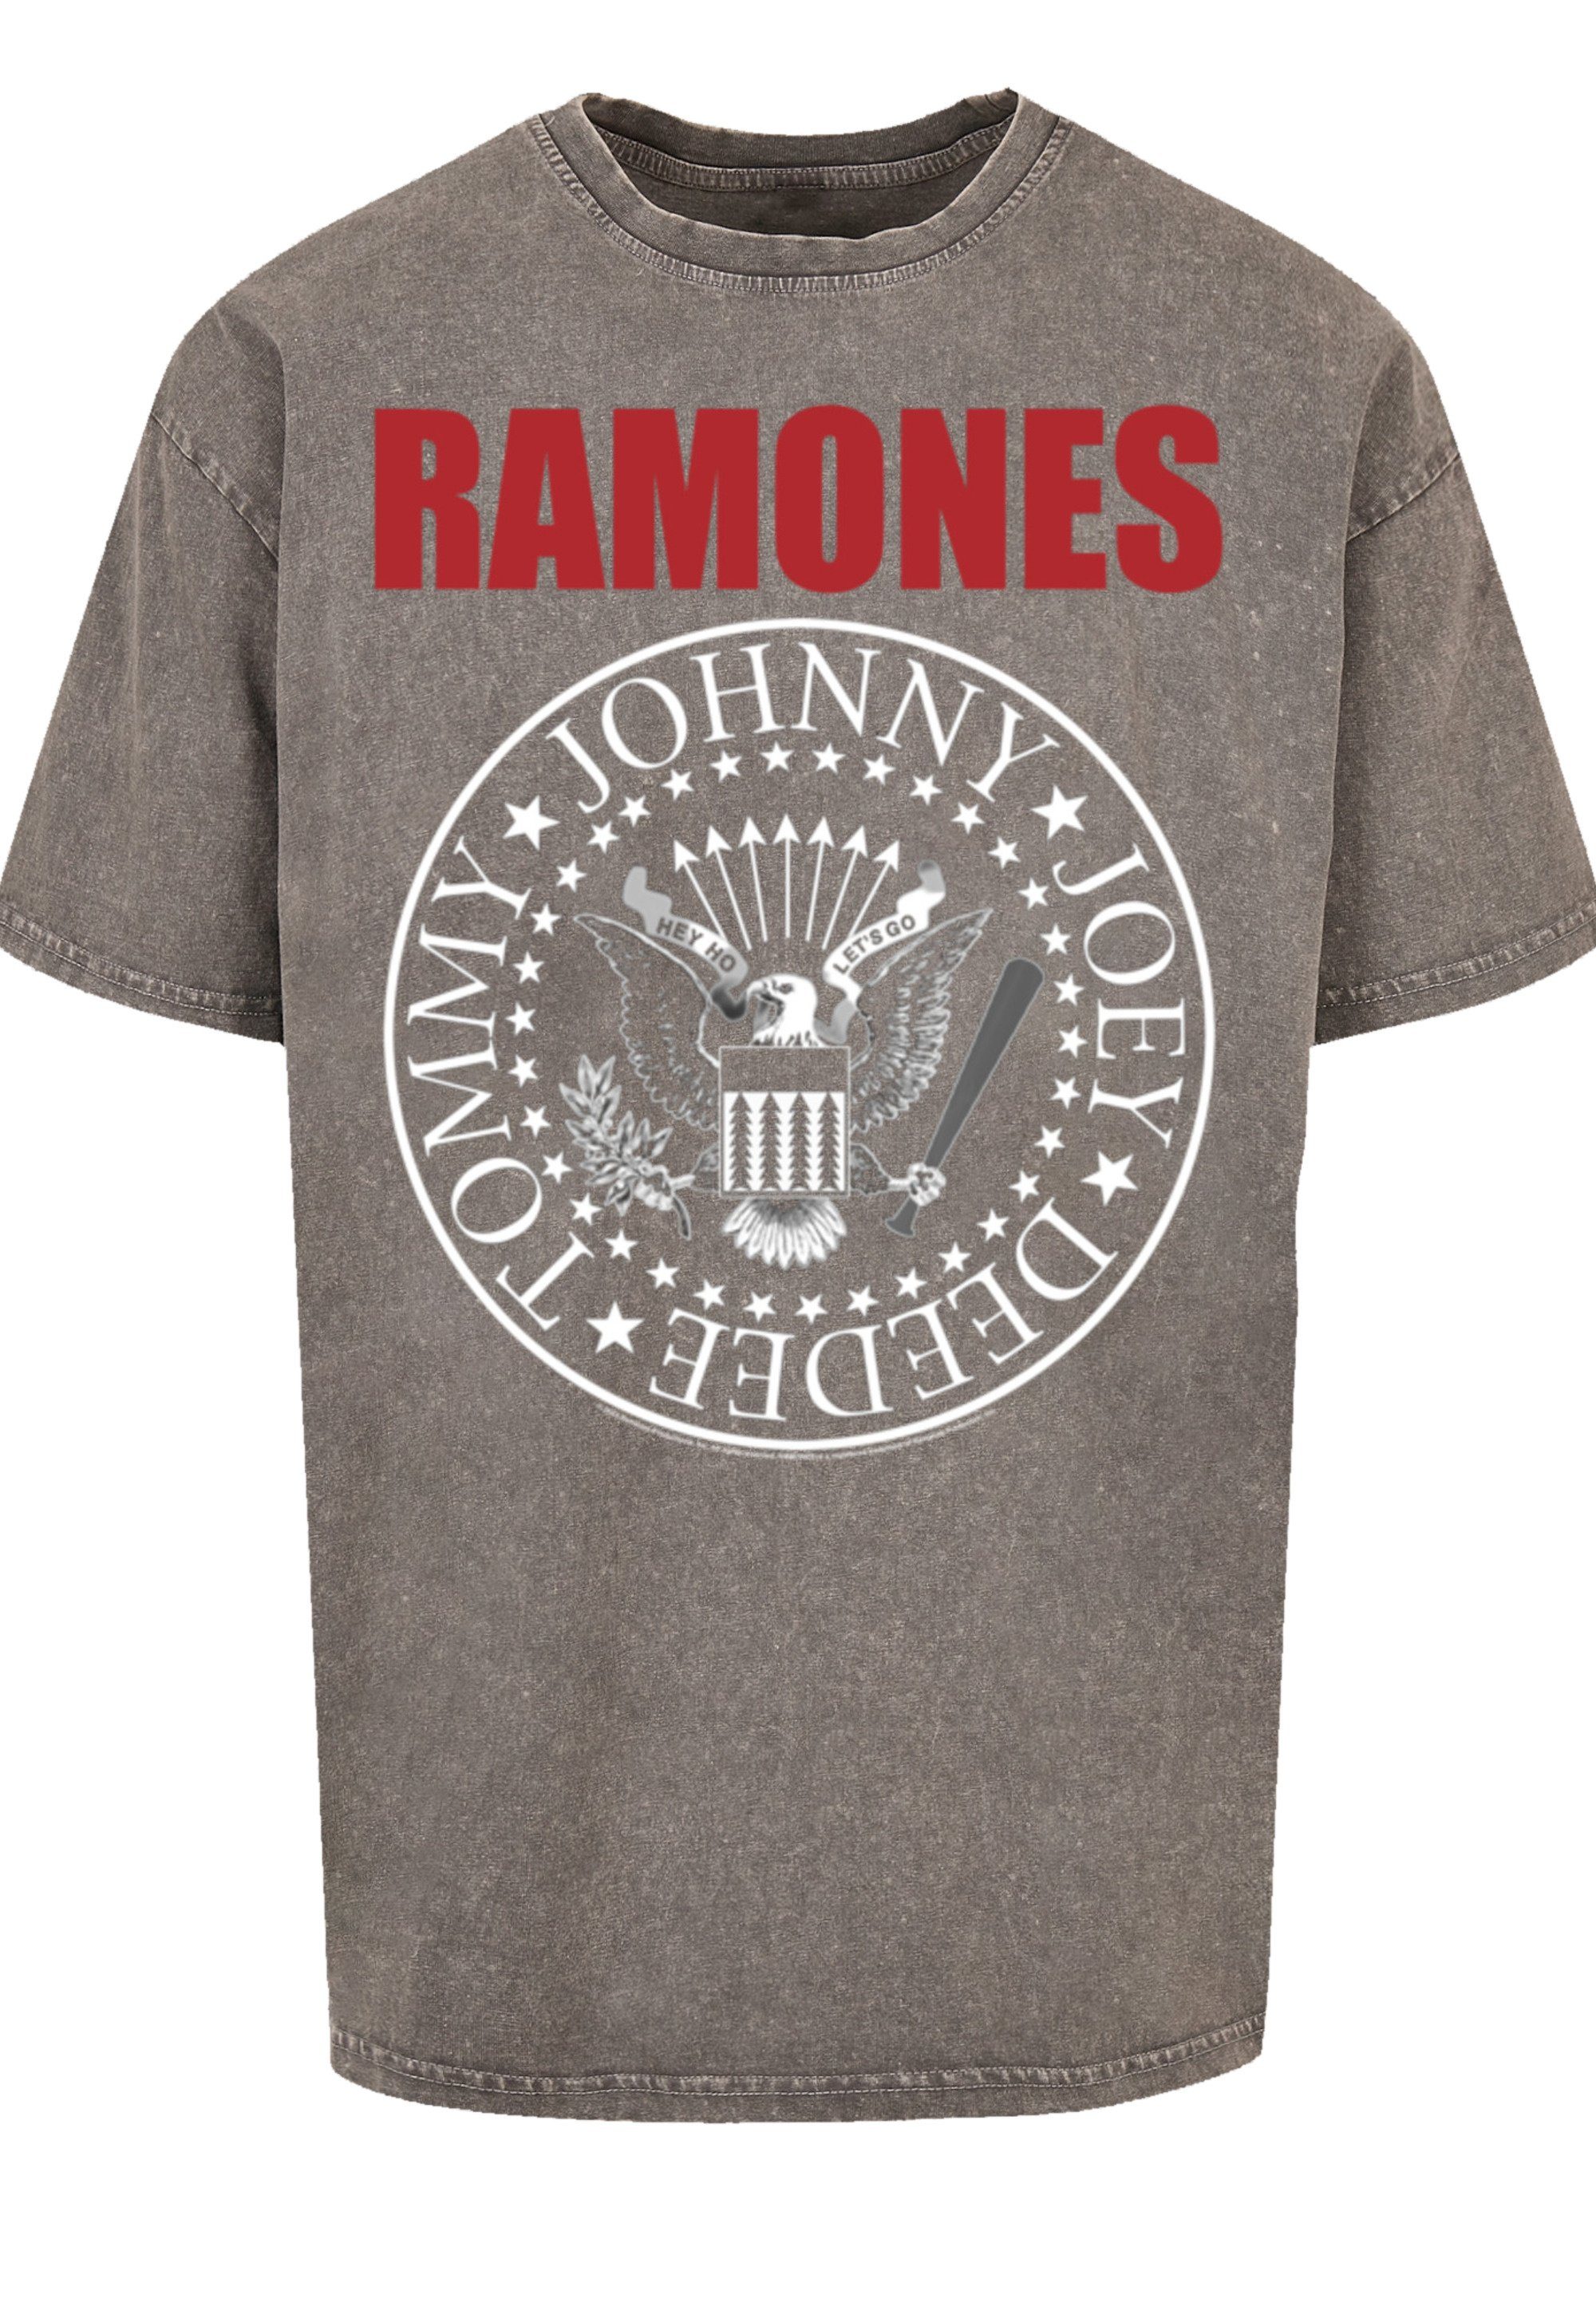 F4NT4STIC T-Shirt Rock-Musik Band, Band Qualität, Red Ramones Rock Asphalt Text Premium Seal Musik